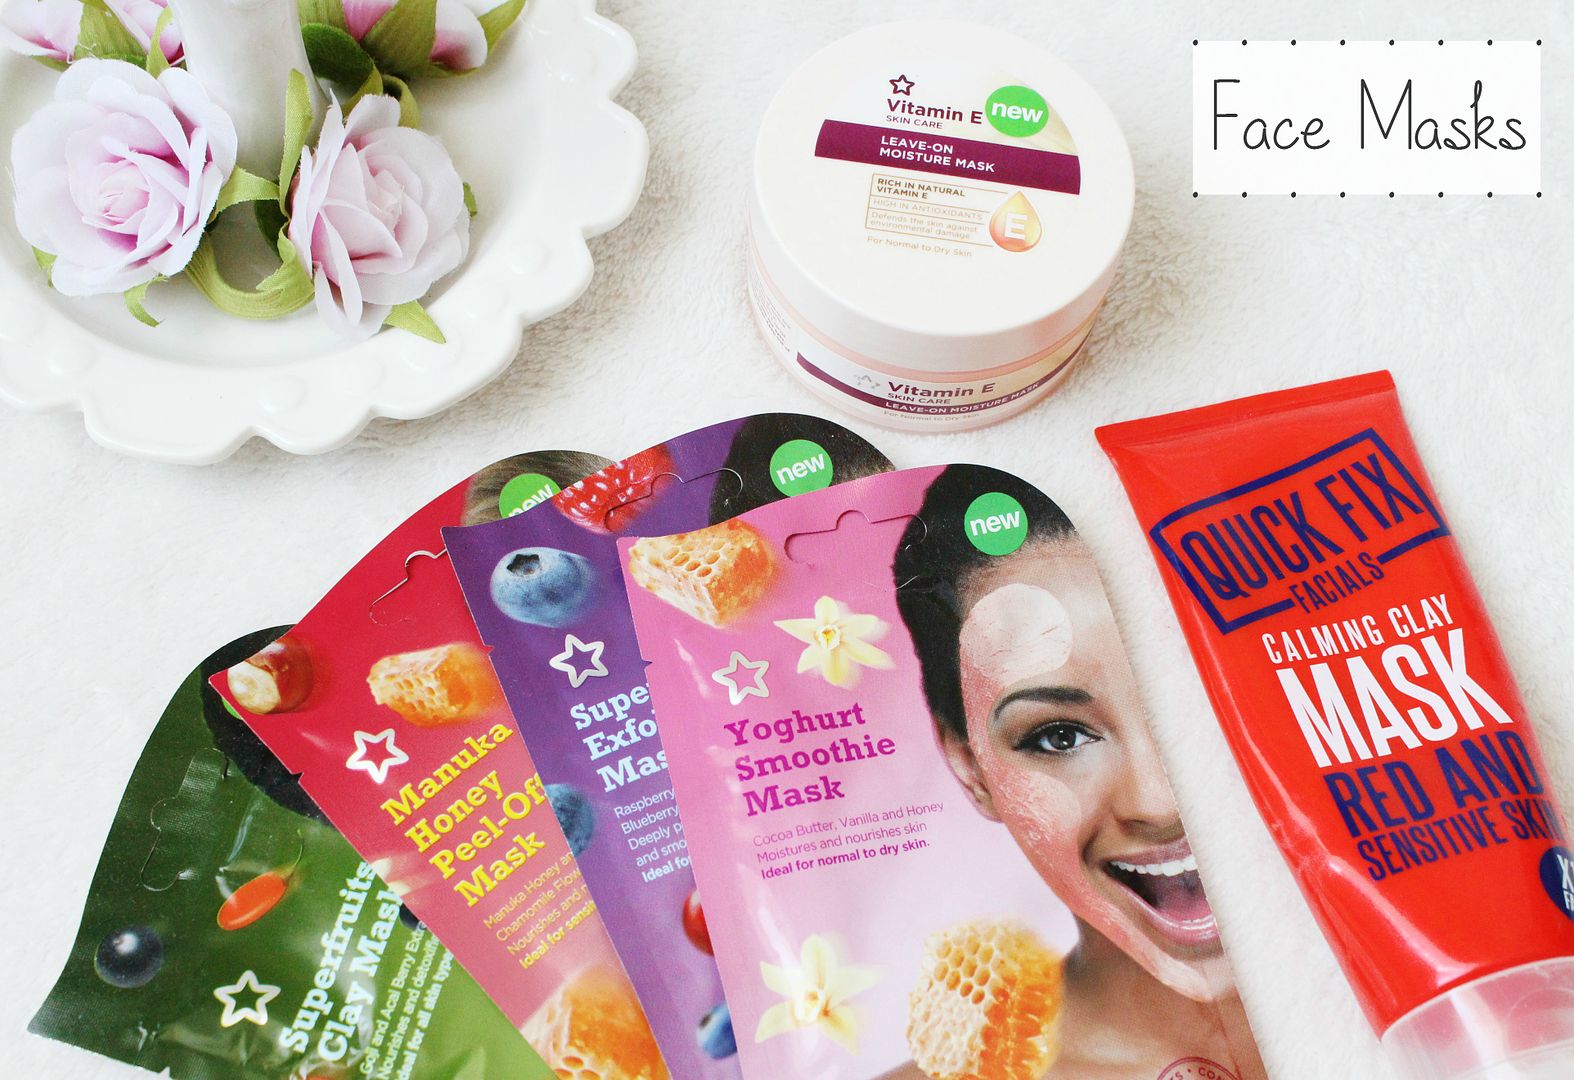 Dry-Senstive-Skin-Care-Routine-2015-Superdrug-Vitamin-E-Leave-On-Mask-Sachet-Face-Masks-Quick-Fix-Calming-Clay-Mask-Belle-Amie-UK-Beauty-Fashion-Lifestyle-Blog